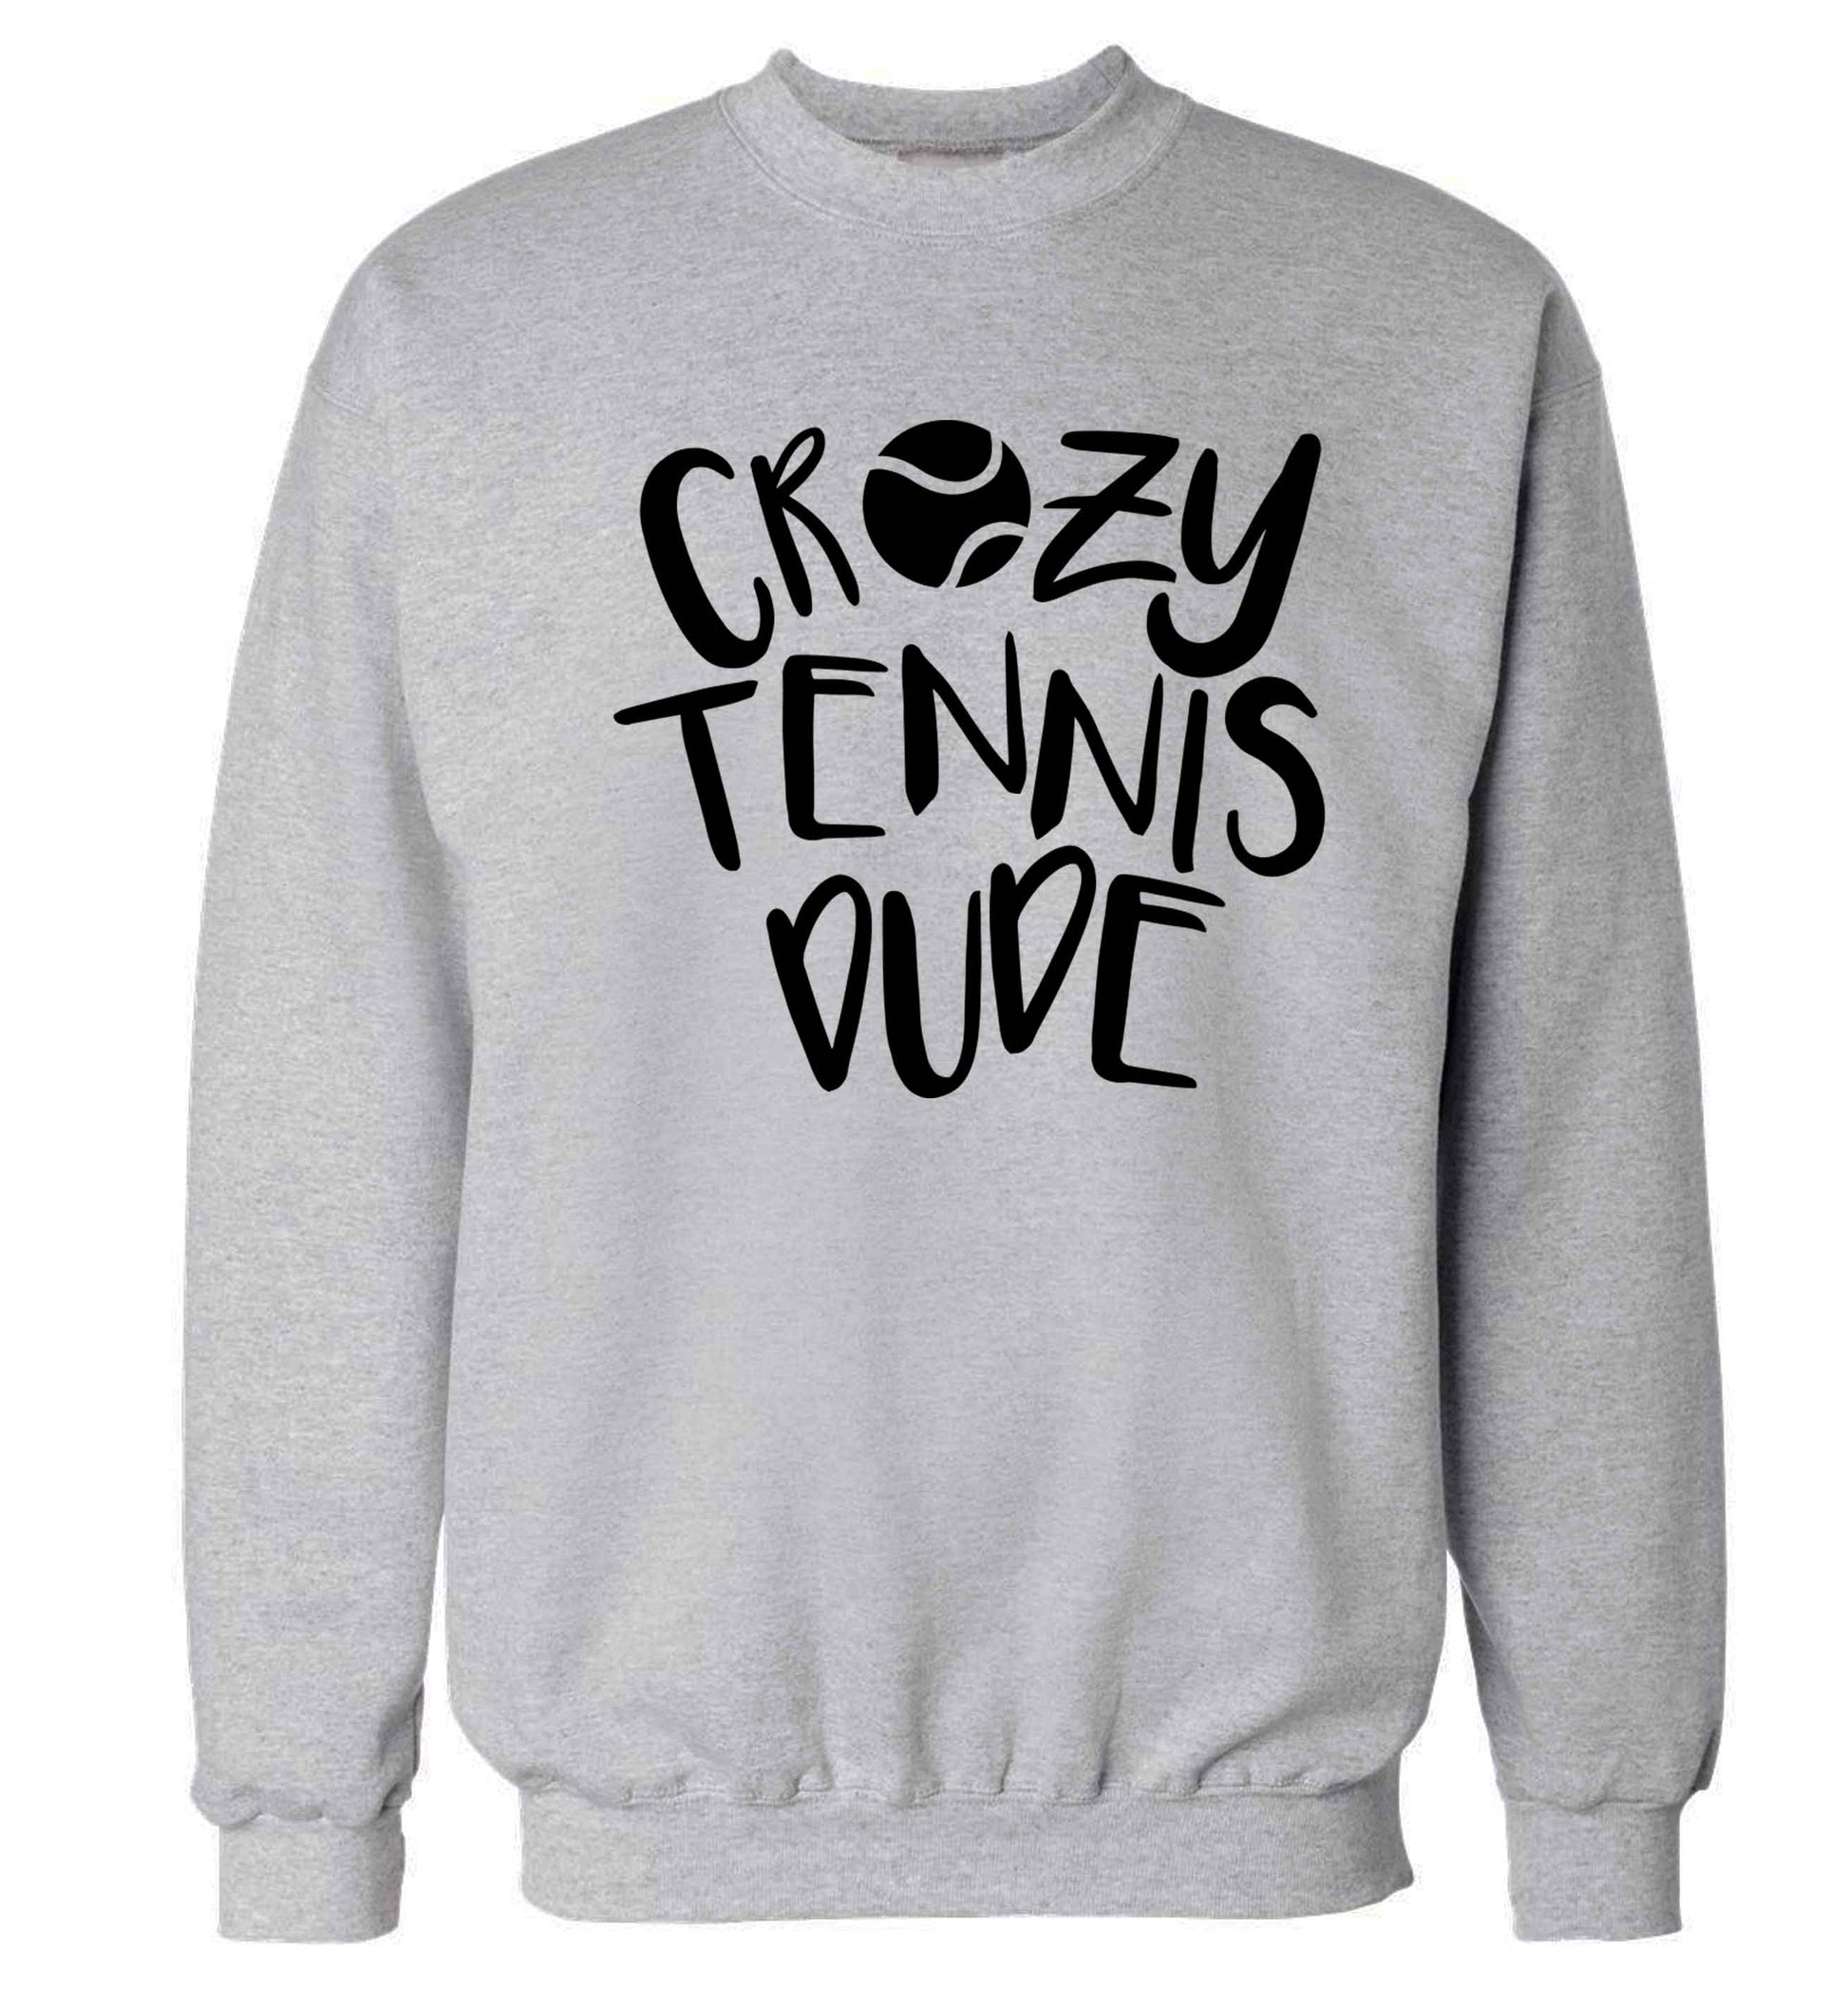 Crazy tennis dude Adult's unisex grey Sweater 2XL